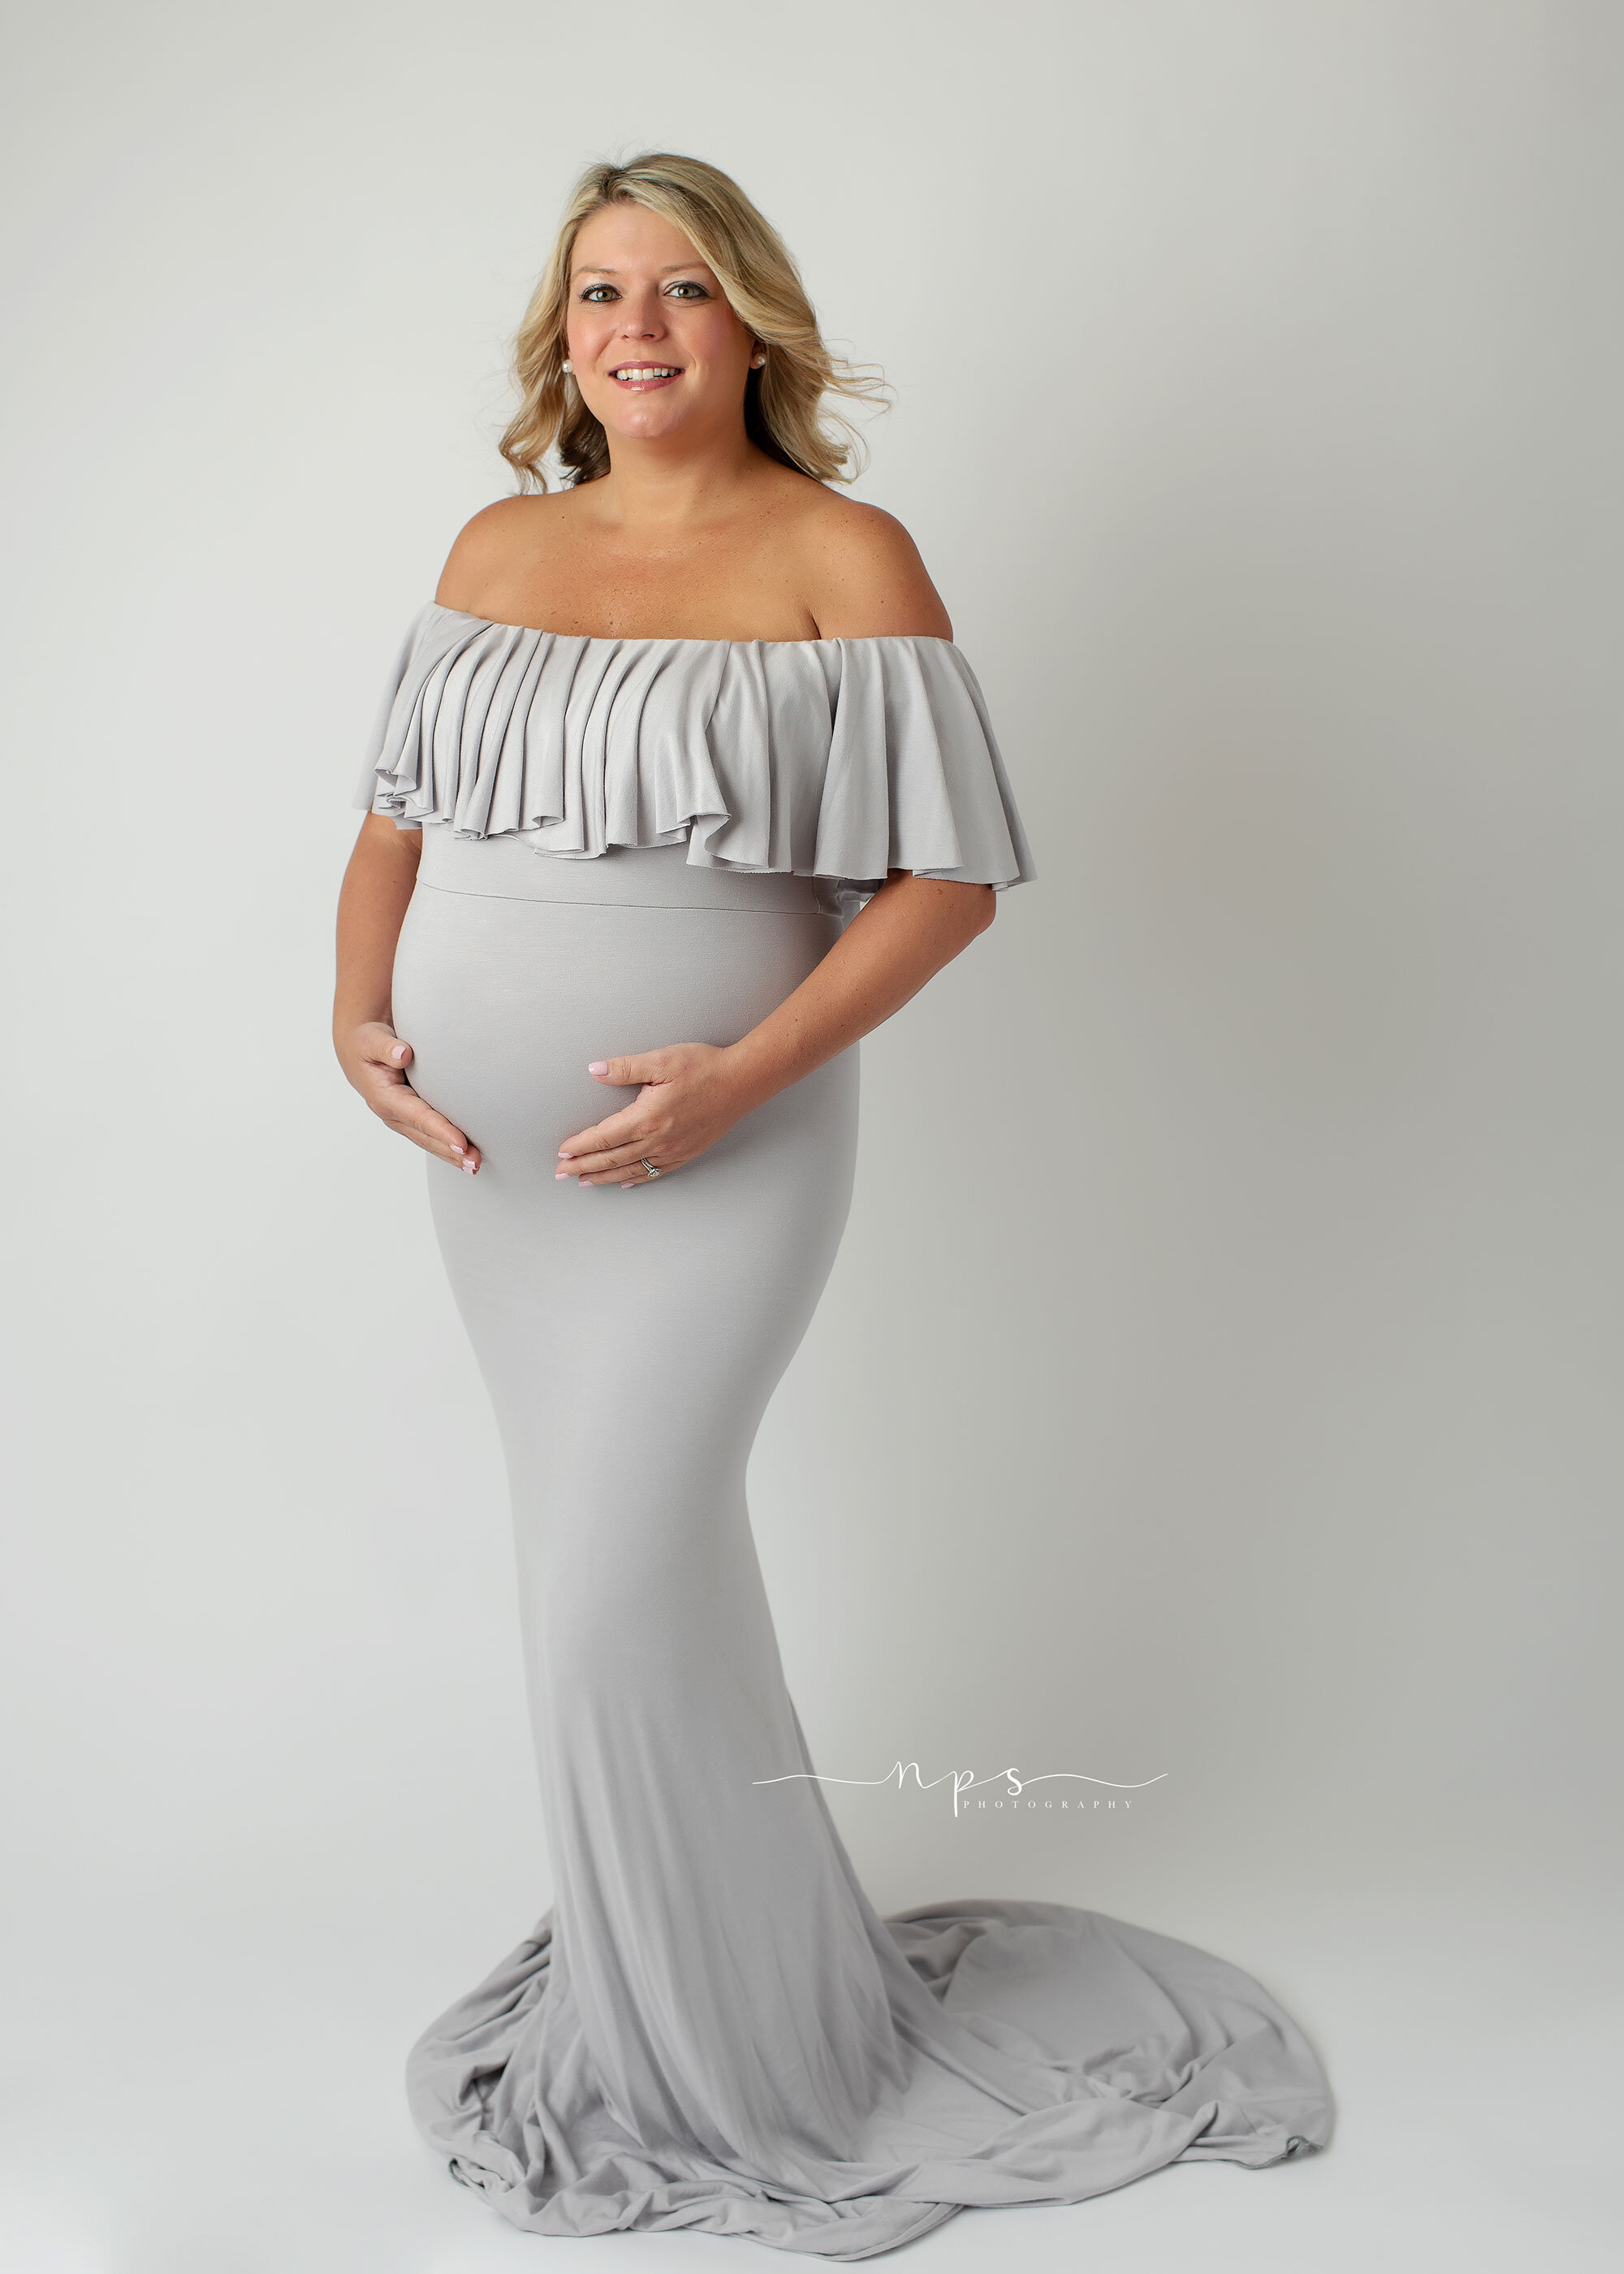 Maternity Portrait Ideas 001 - NPS Photography